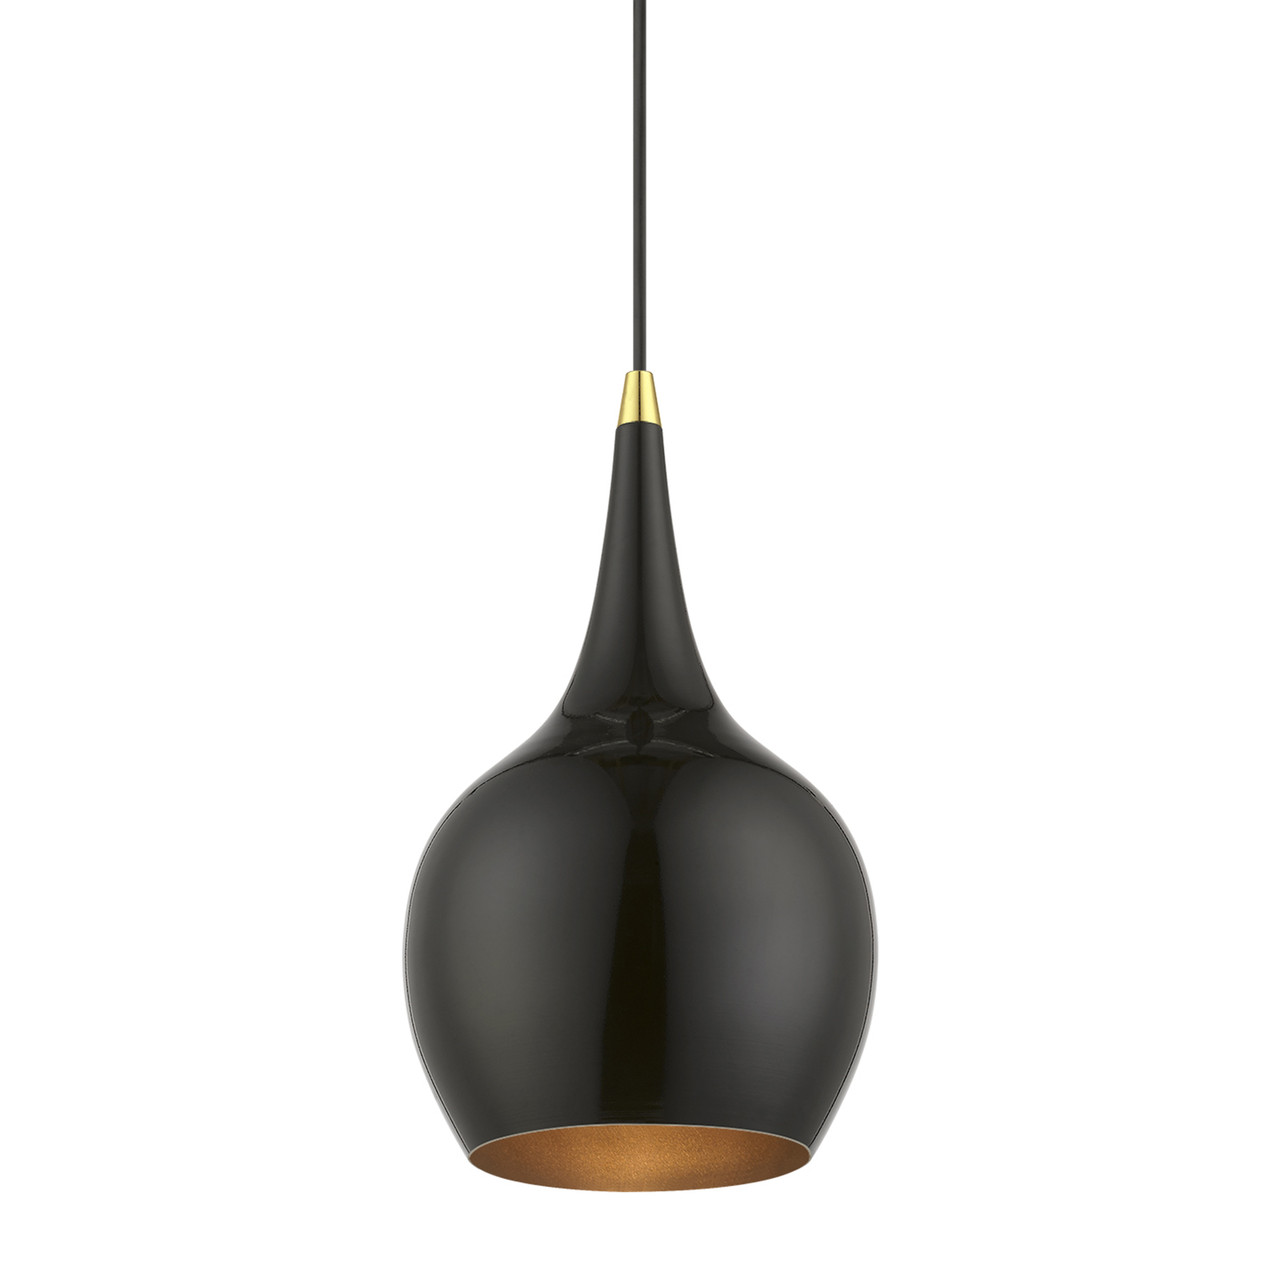 LIVEX LIGHTING 49016-68 1 Light Shiny Black with Polished Brass Accents Mini Pendant